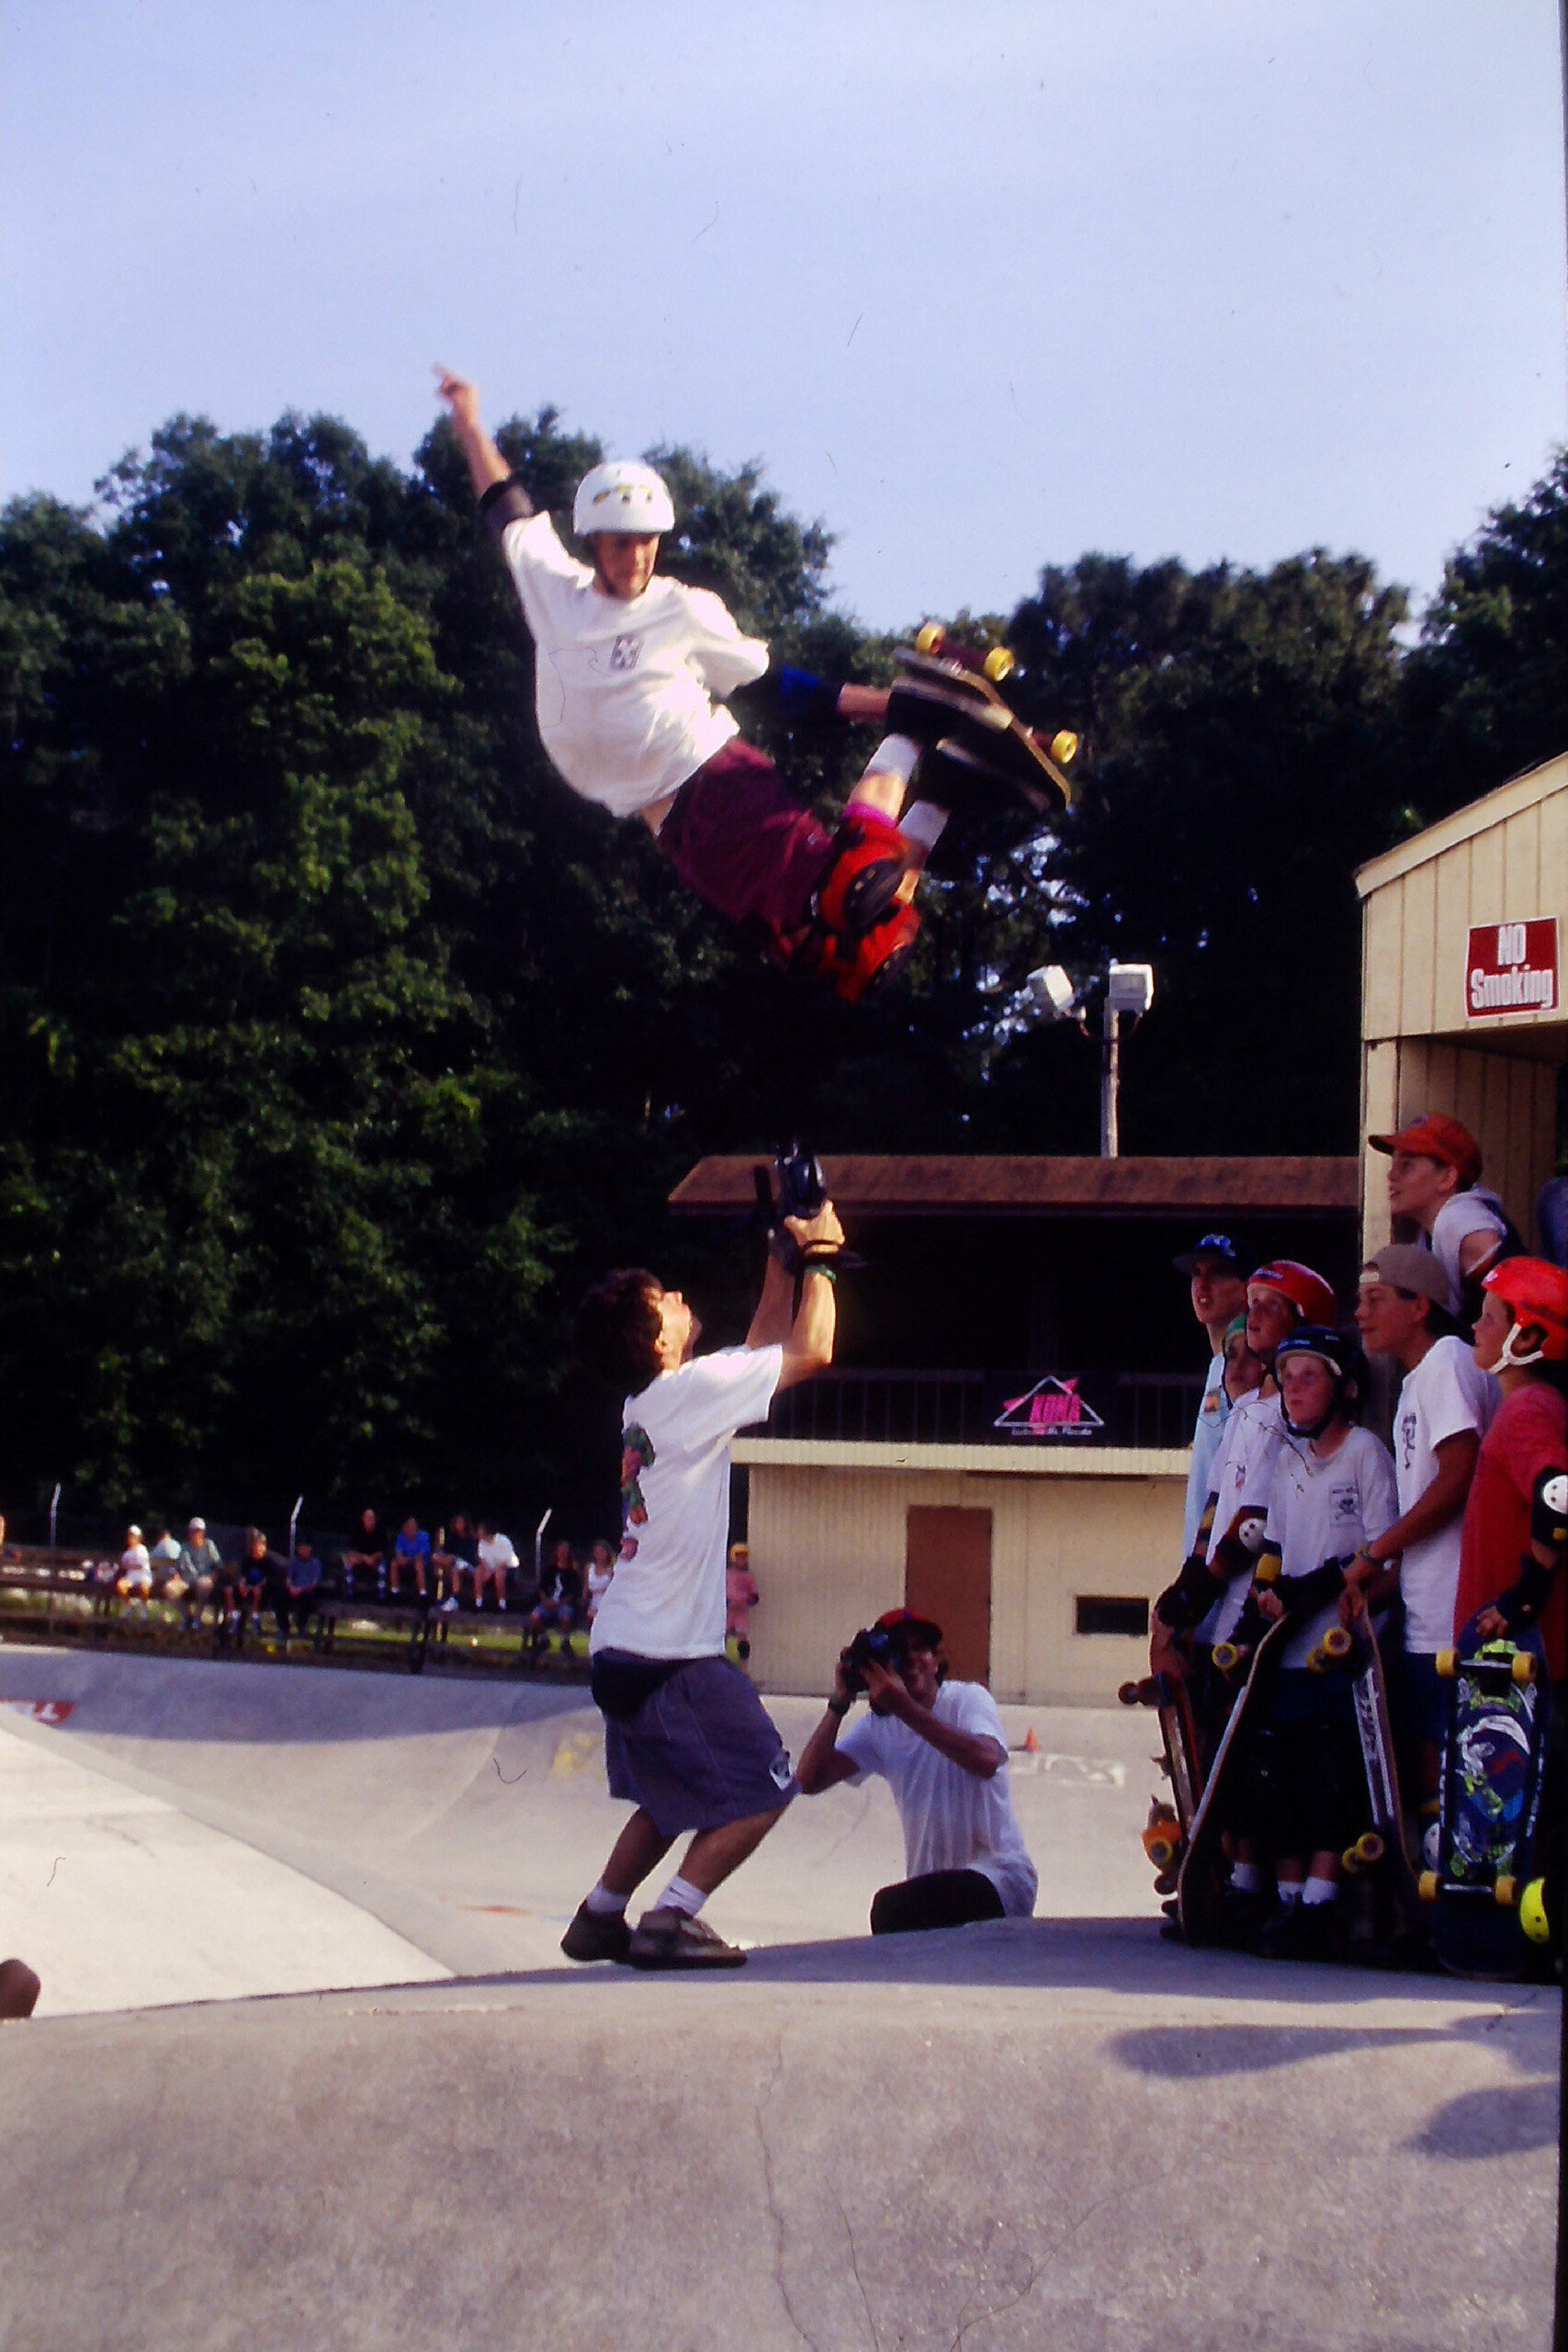 Danny Way - Kona Skatepark, Daytona Beach, Florida, 1991, Method transfer